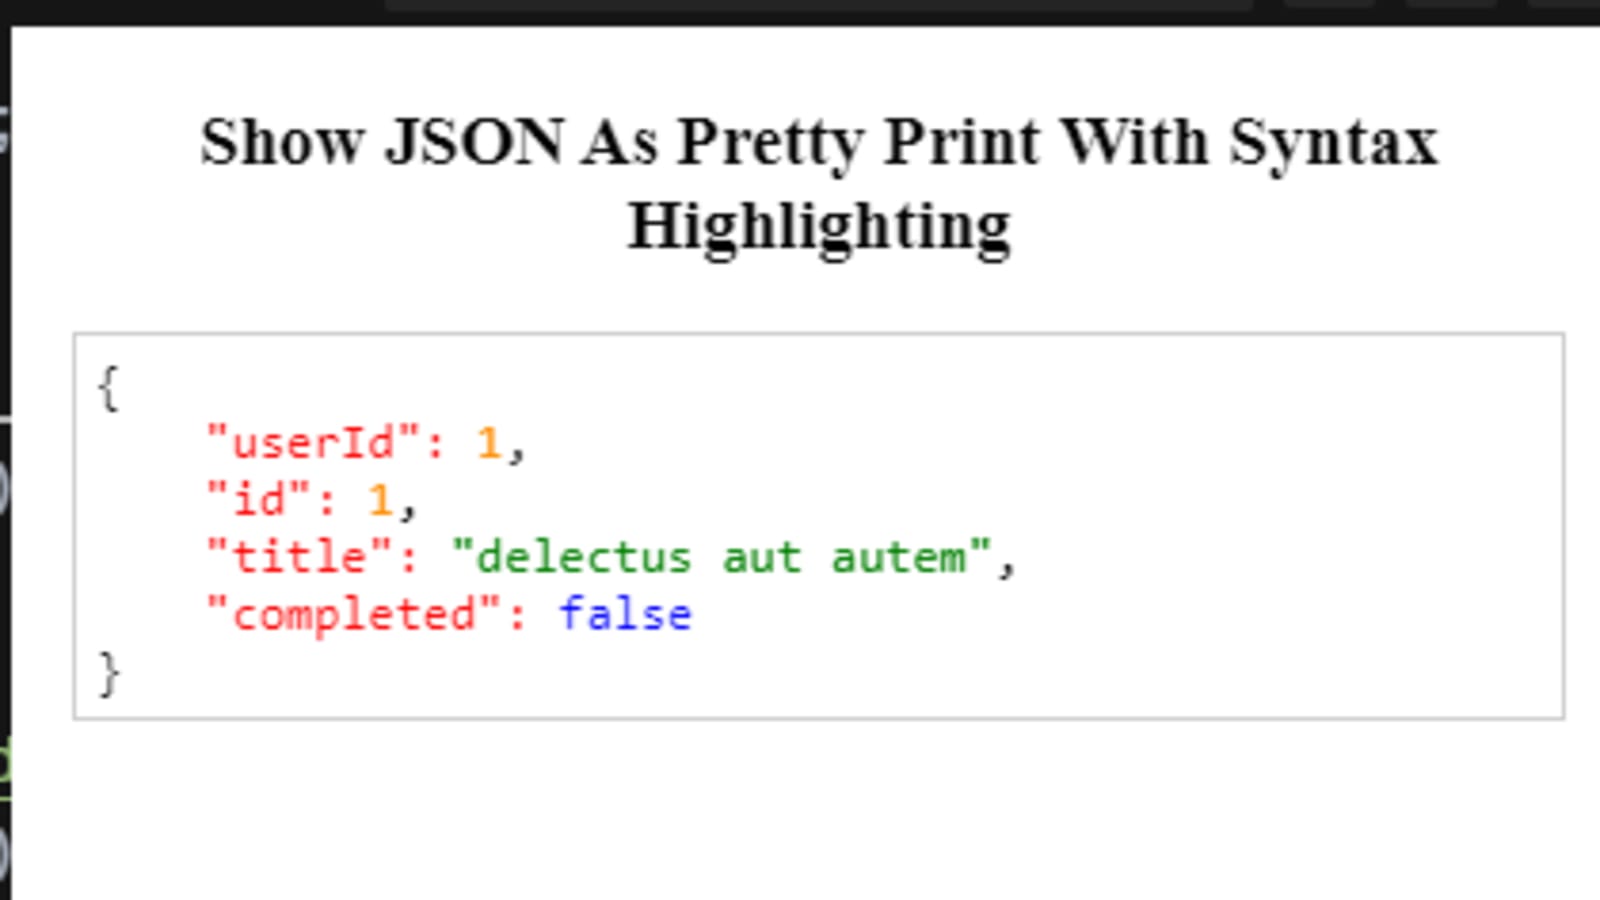 Show JSON As Pretty Print Highlighting in React - DEV Community